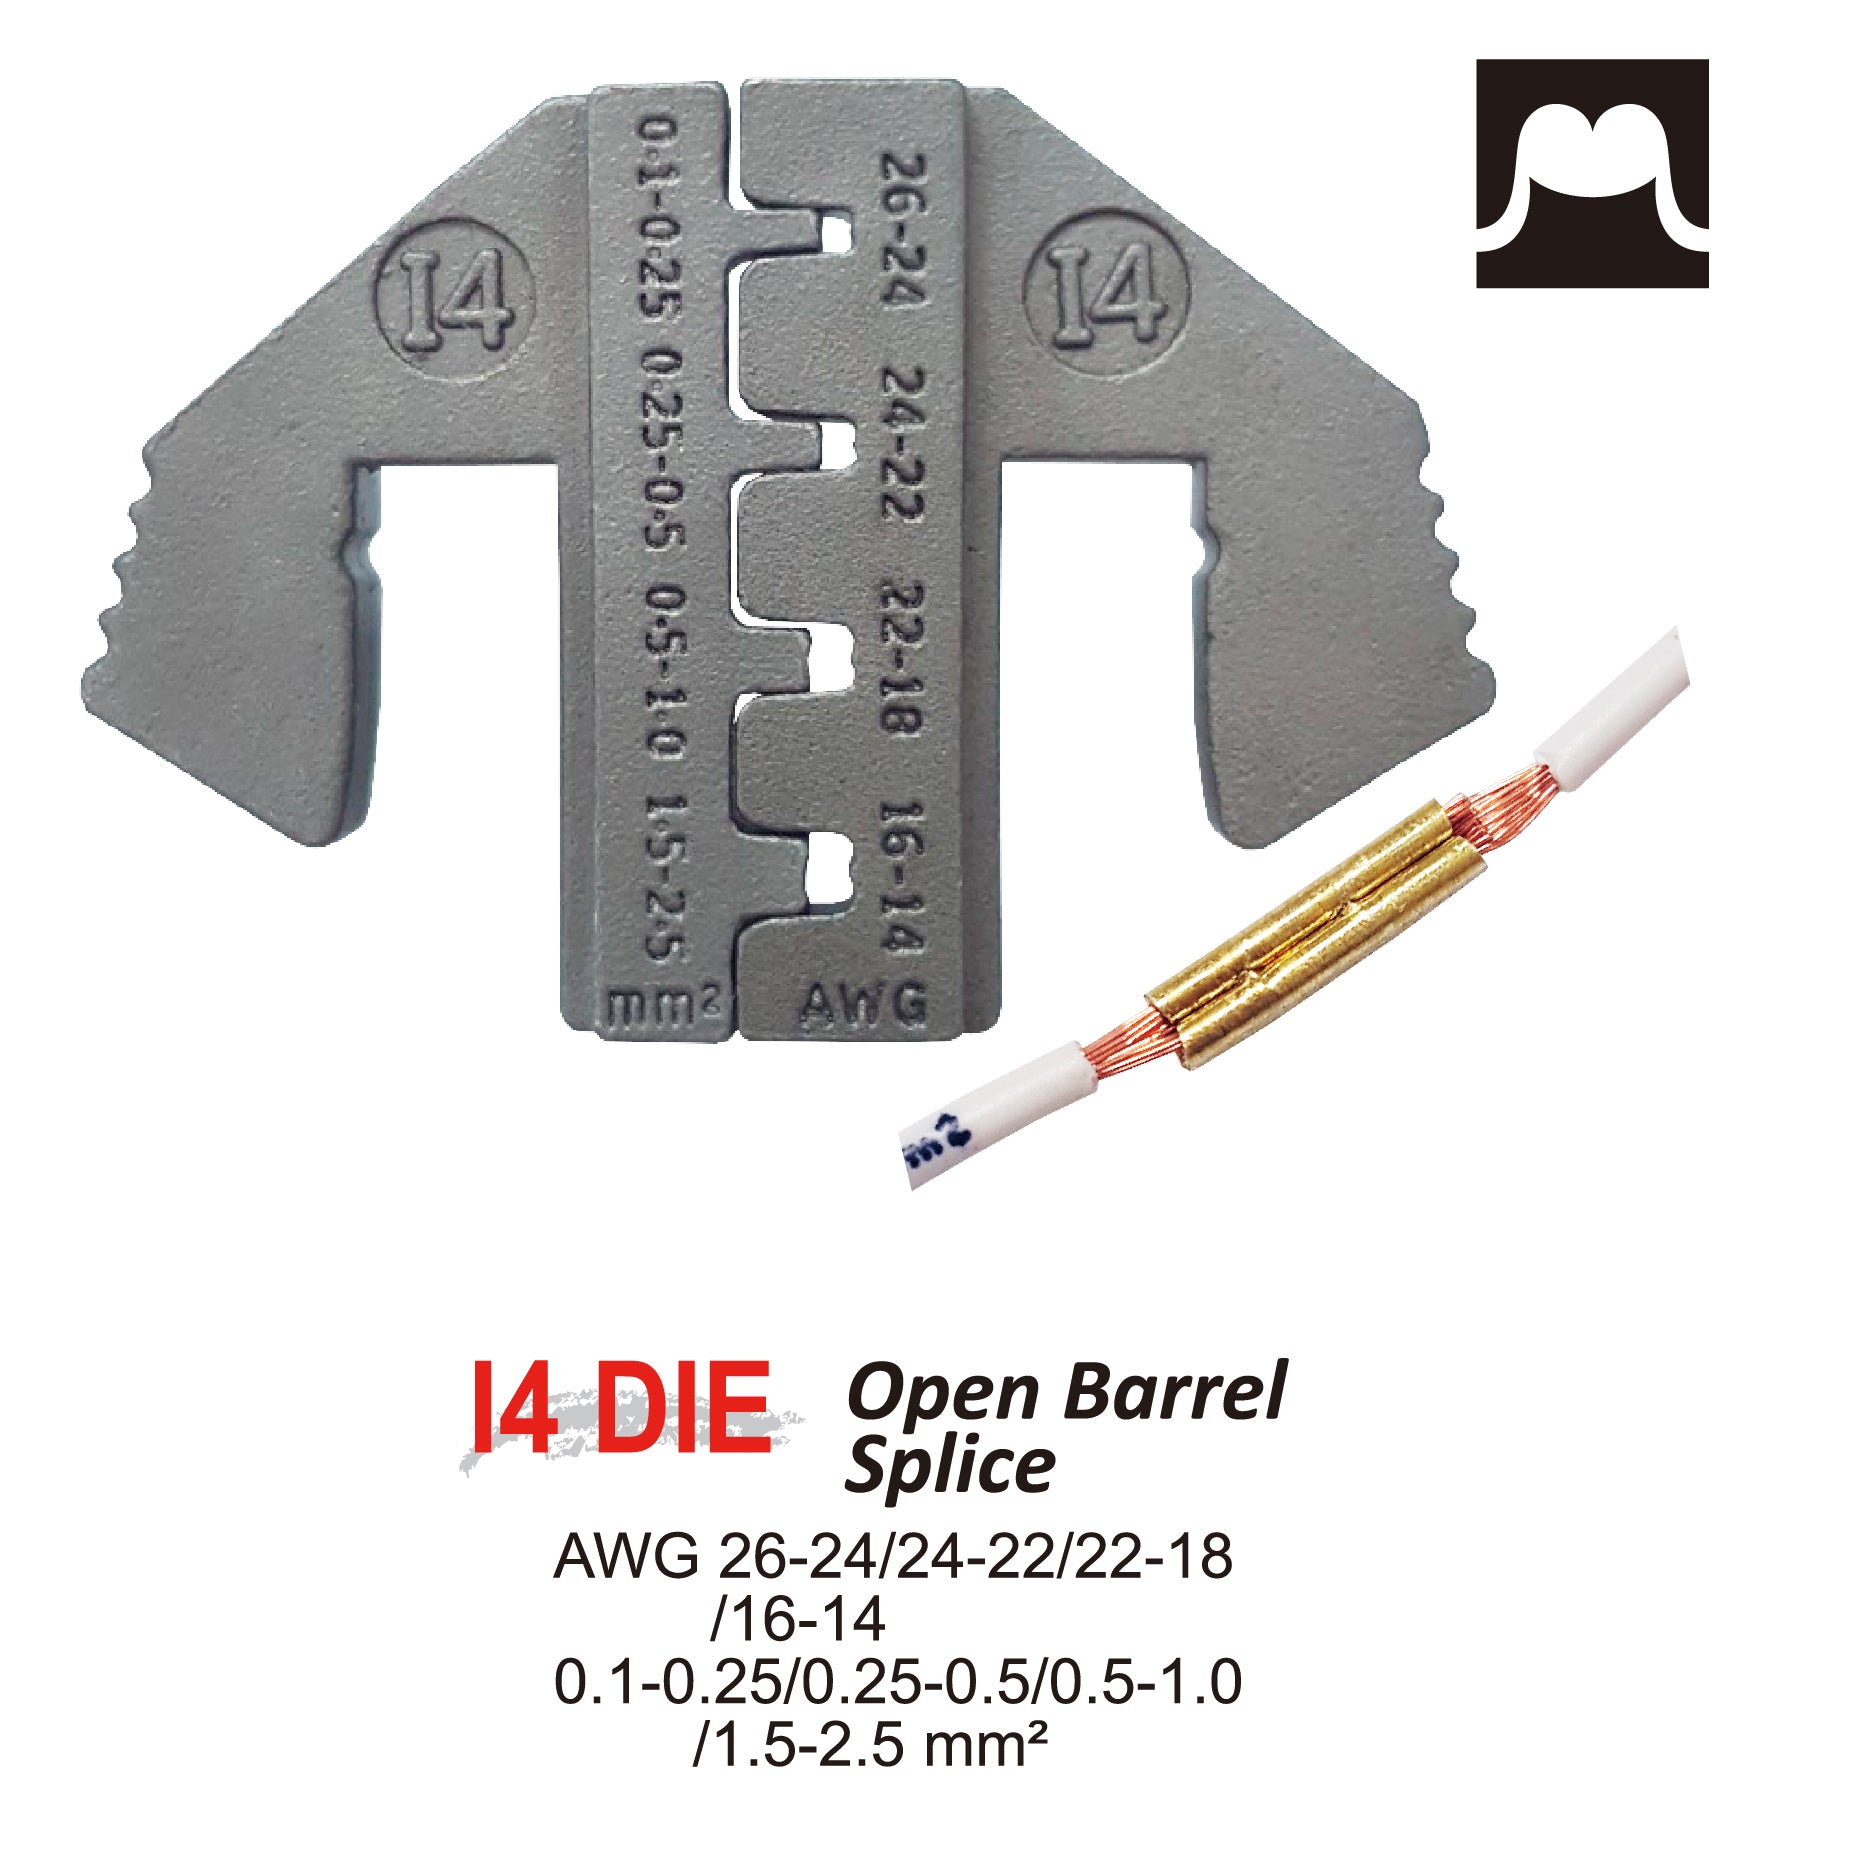 Crimping Tool Die - I4 Die for Open Barrel Splice AWG 26-24/24-22/22-18/16-14 - Tool Guy Republic